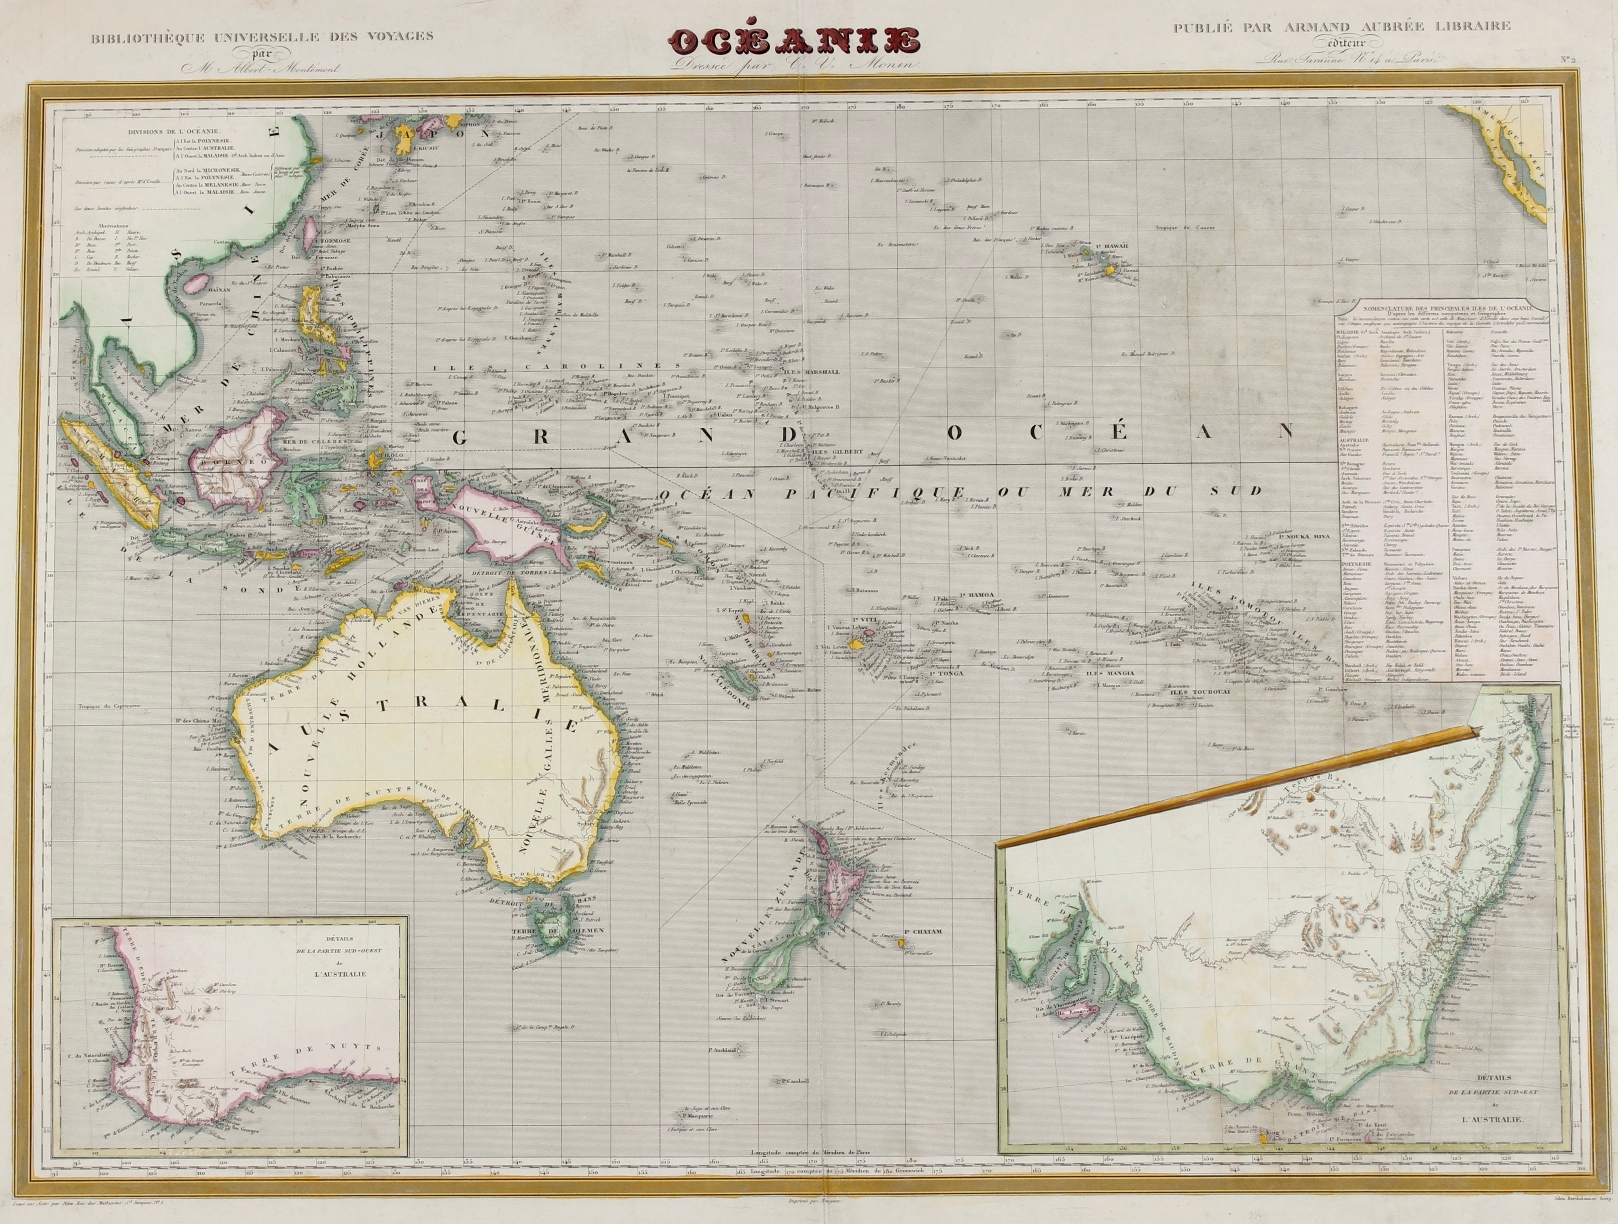  - Oceania, Australia - Monin, 1836